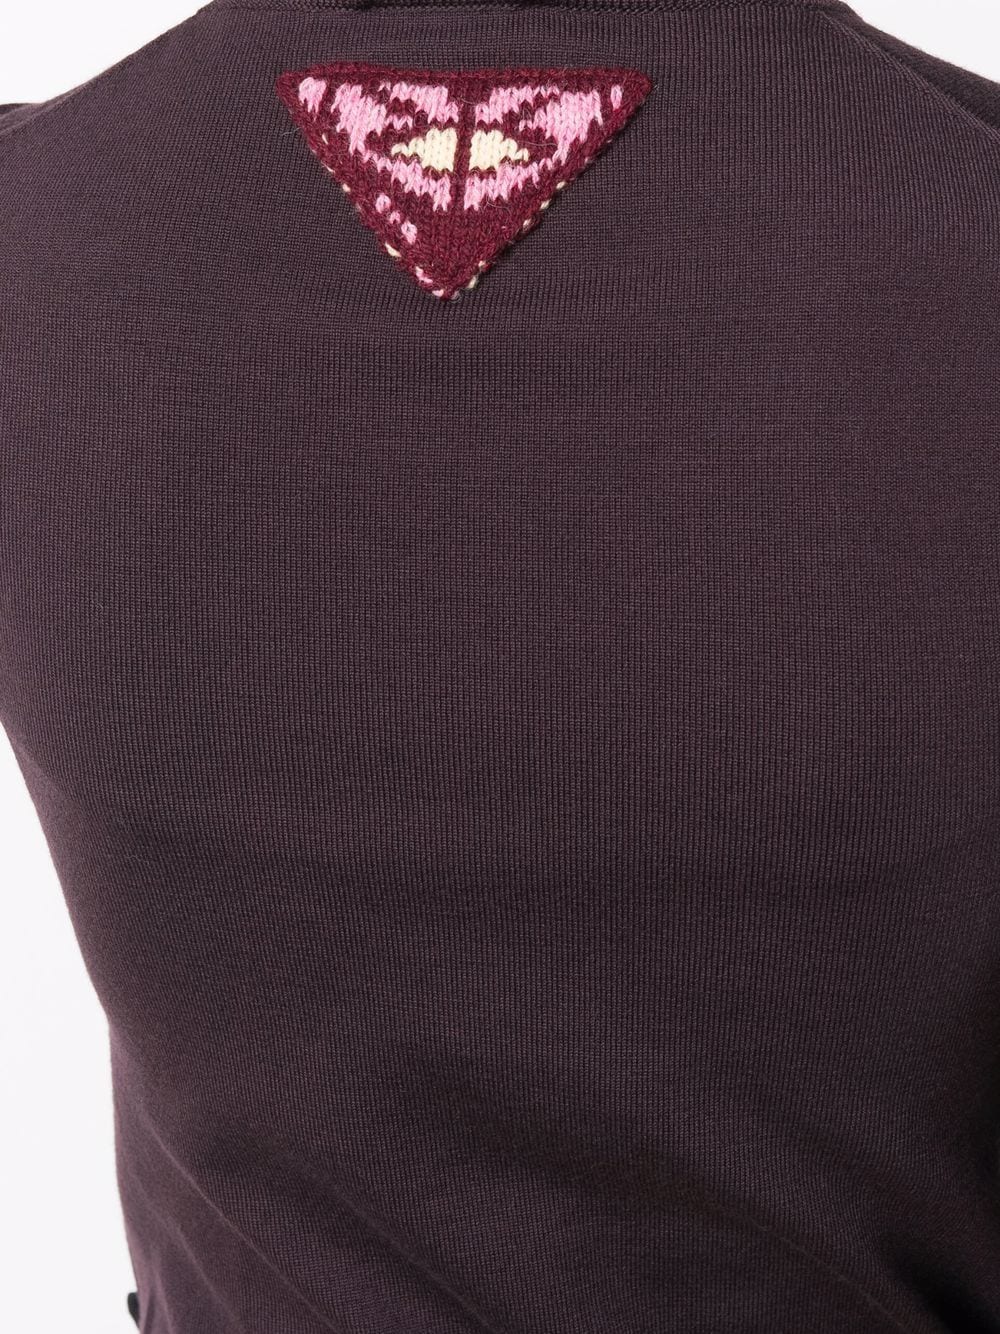 Aubergine red virgin wool blend knitted logo-patch jumper